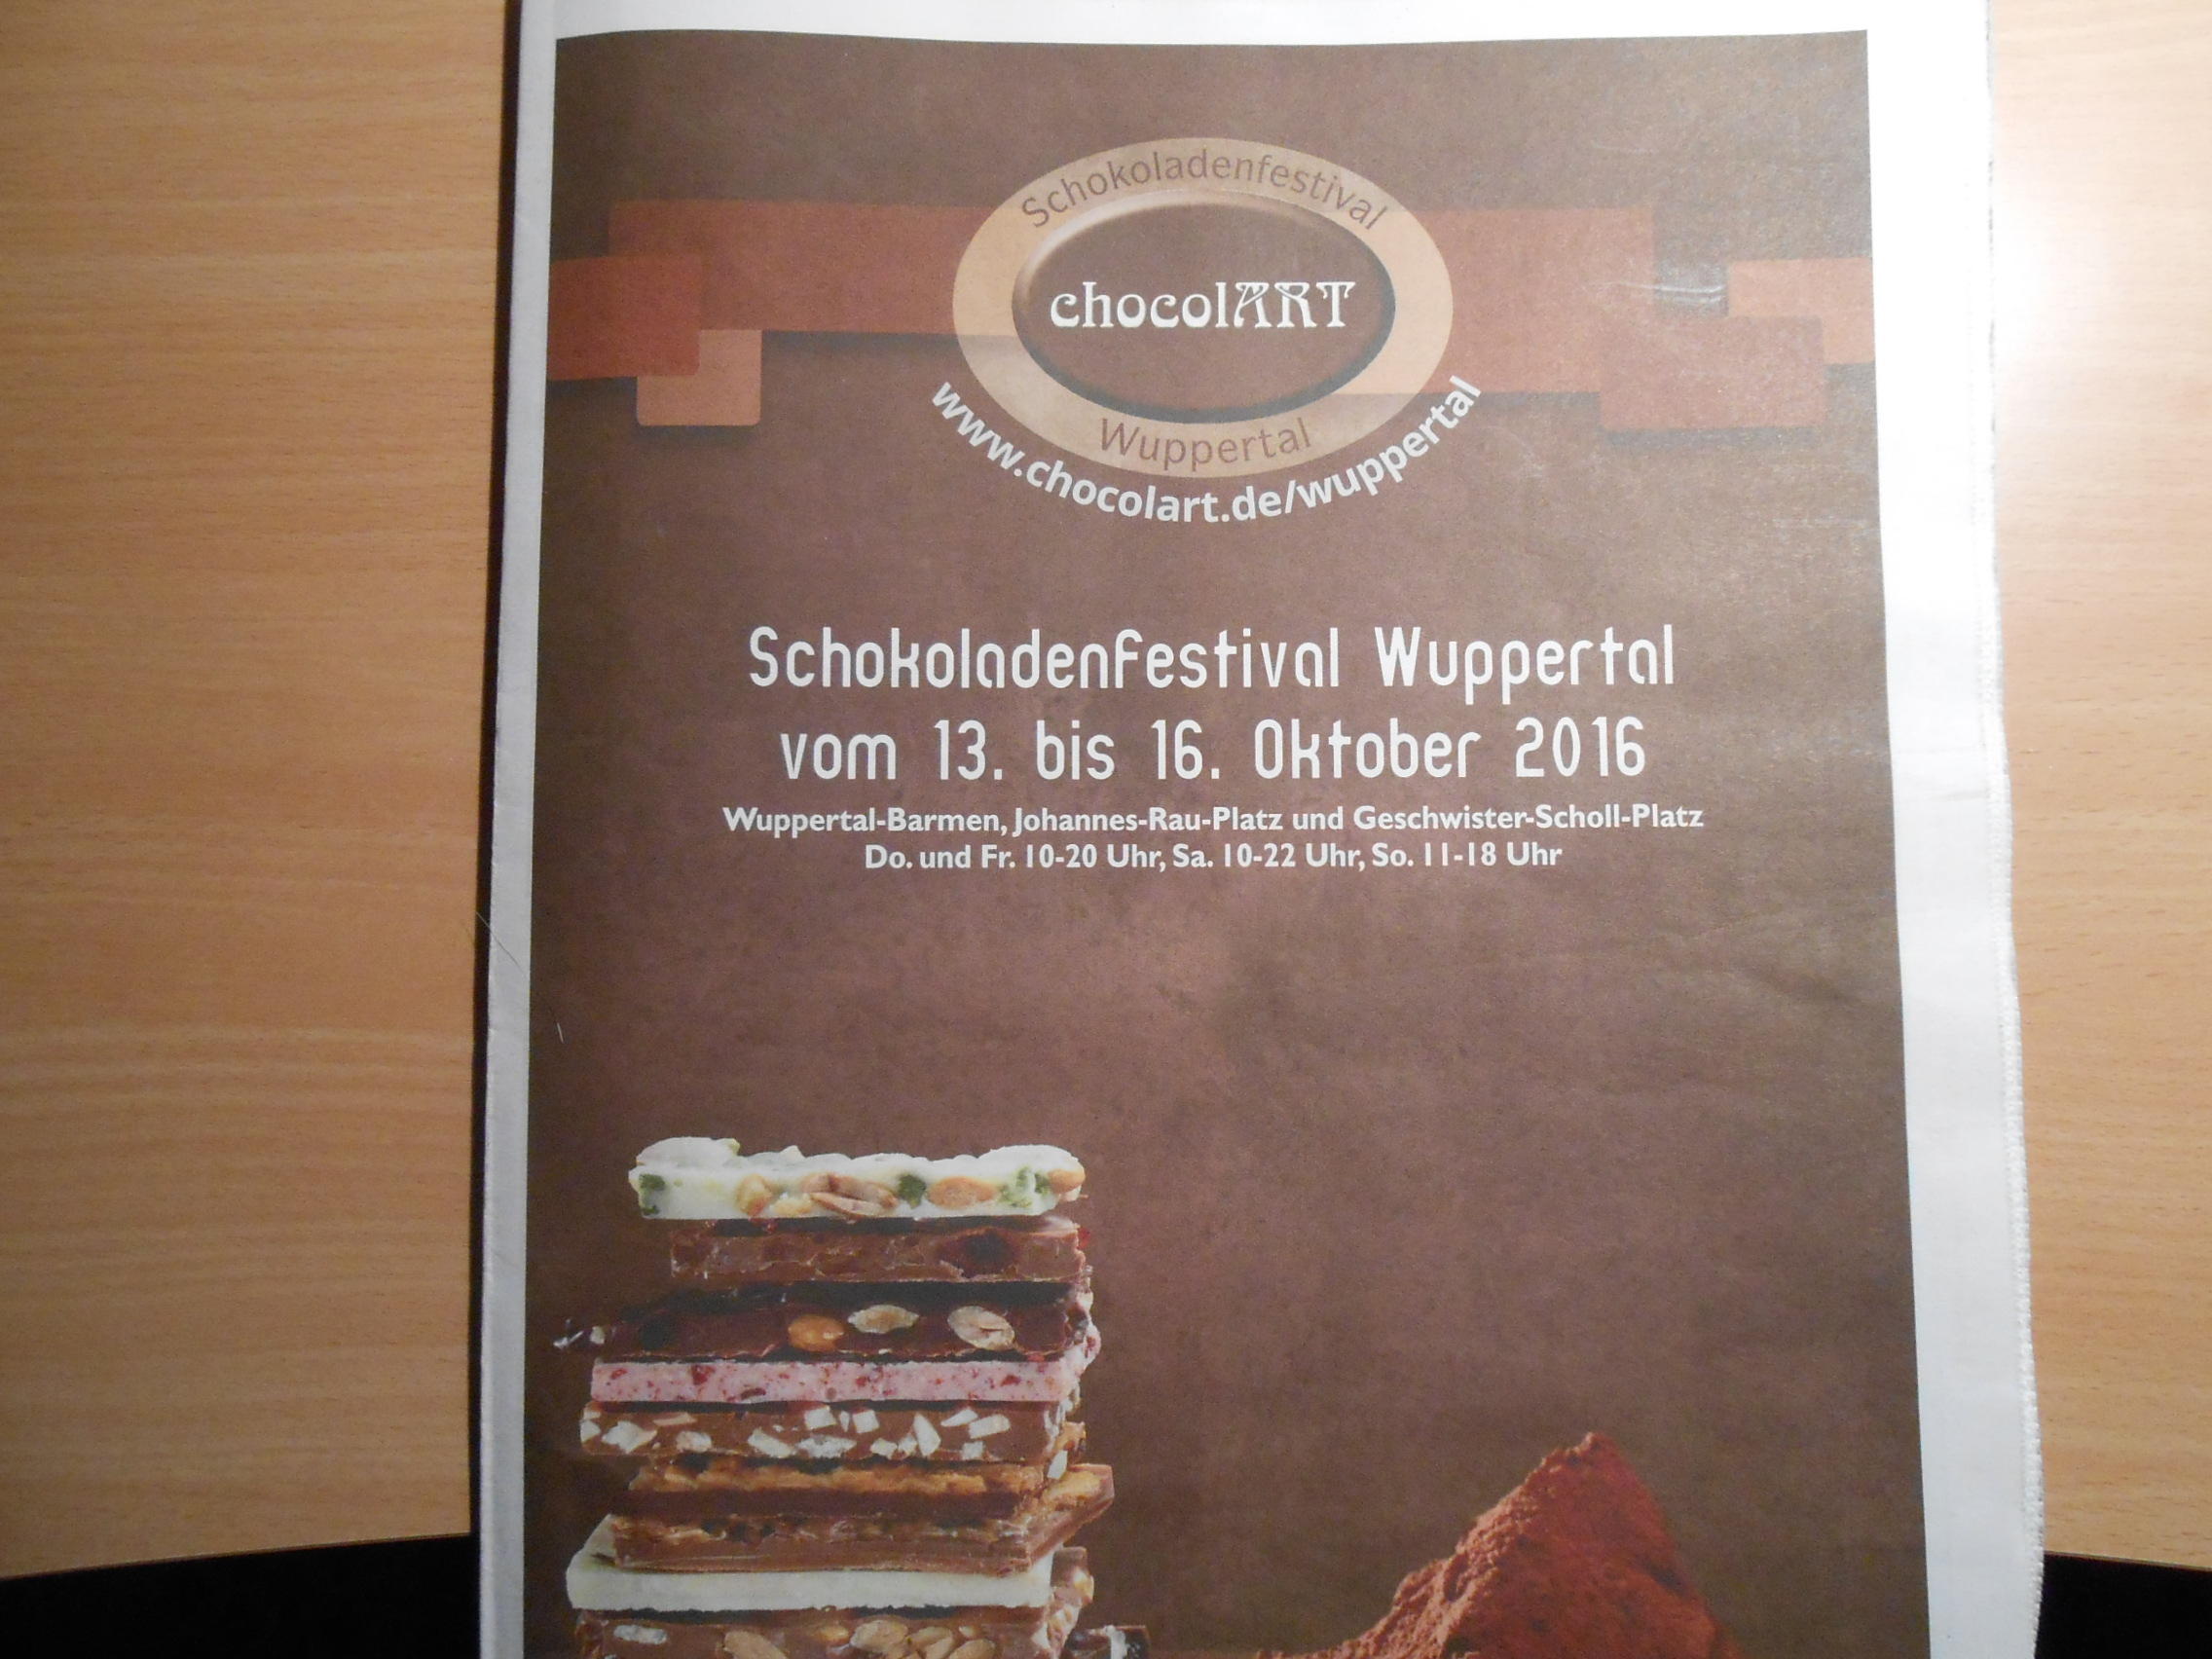 Schokoladenvestival in Wuppertal